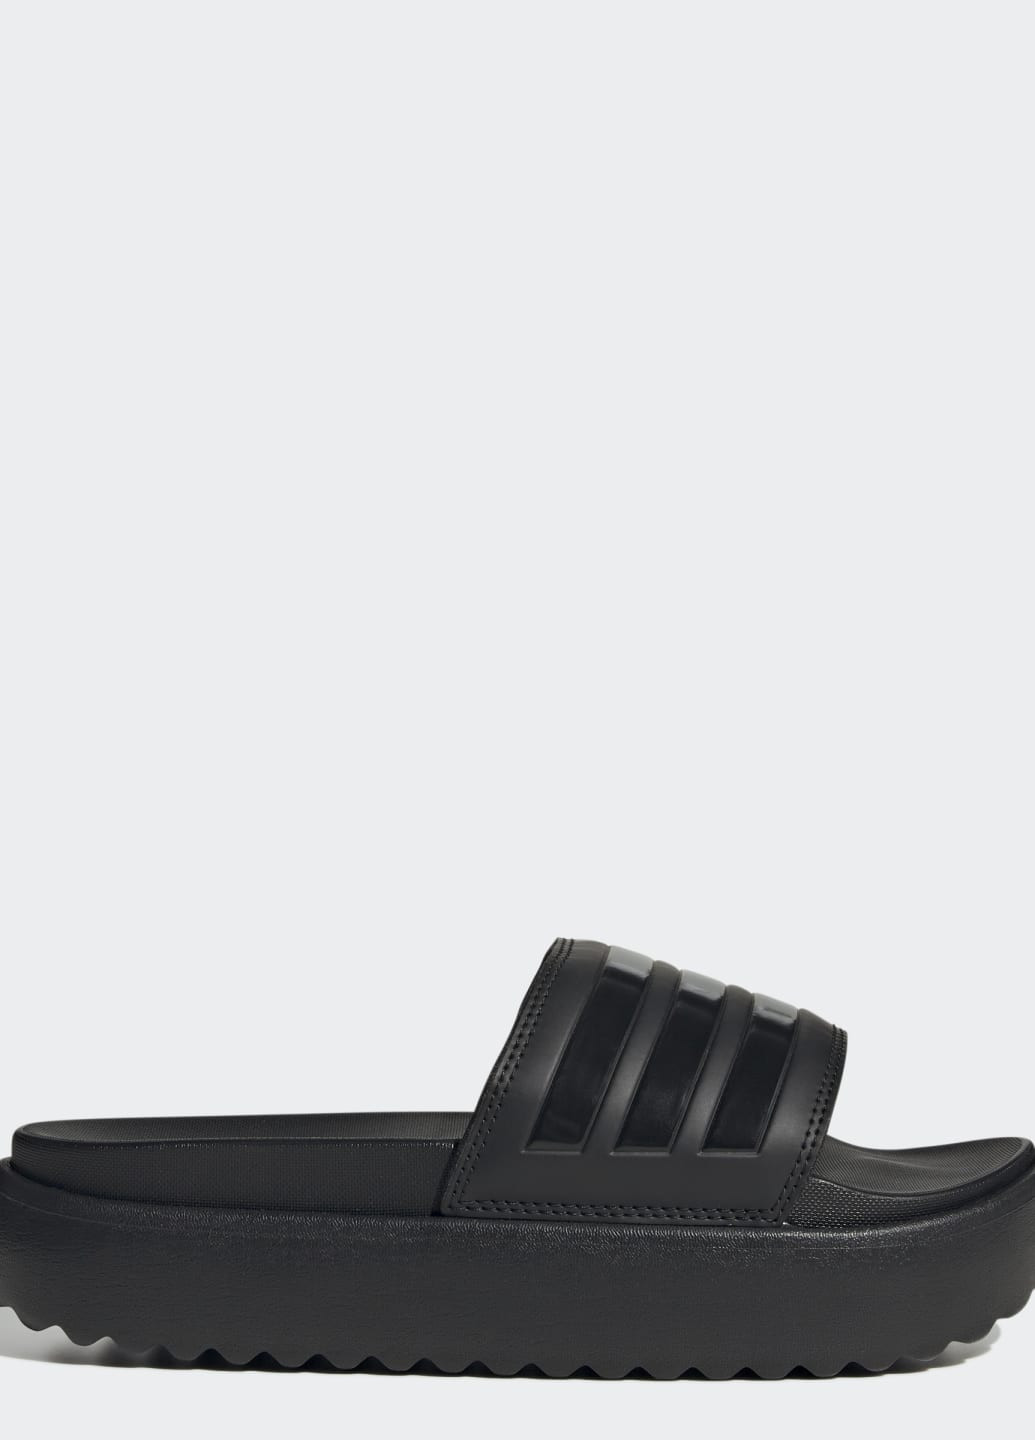 Черные шлепанцы adilette platform adidas